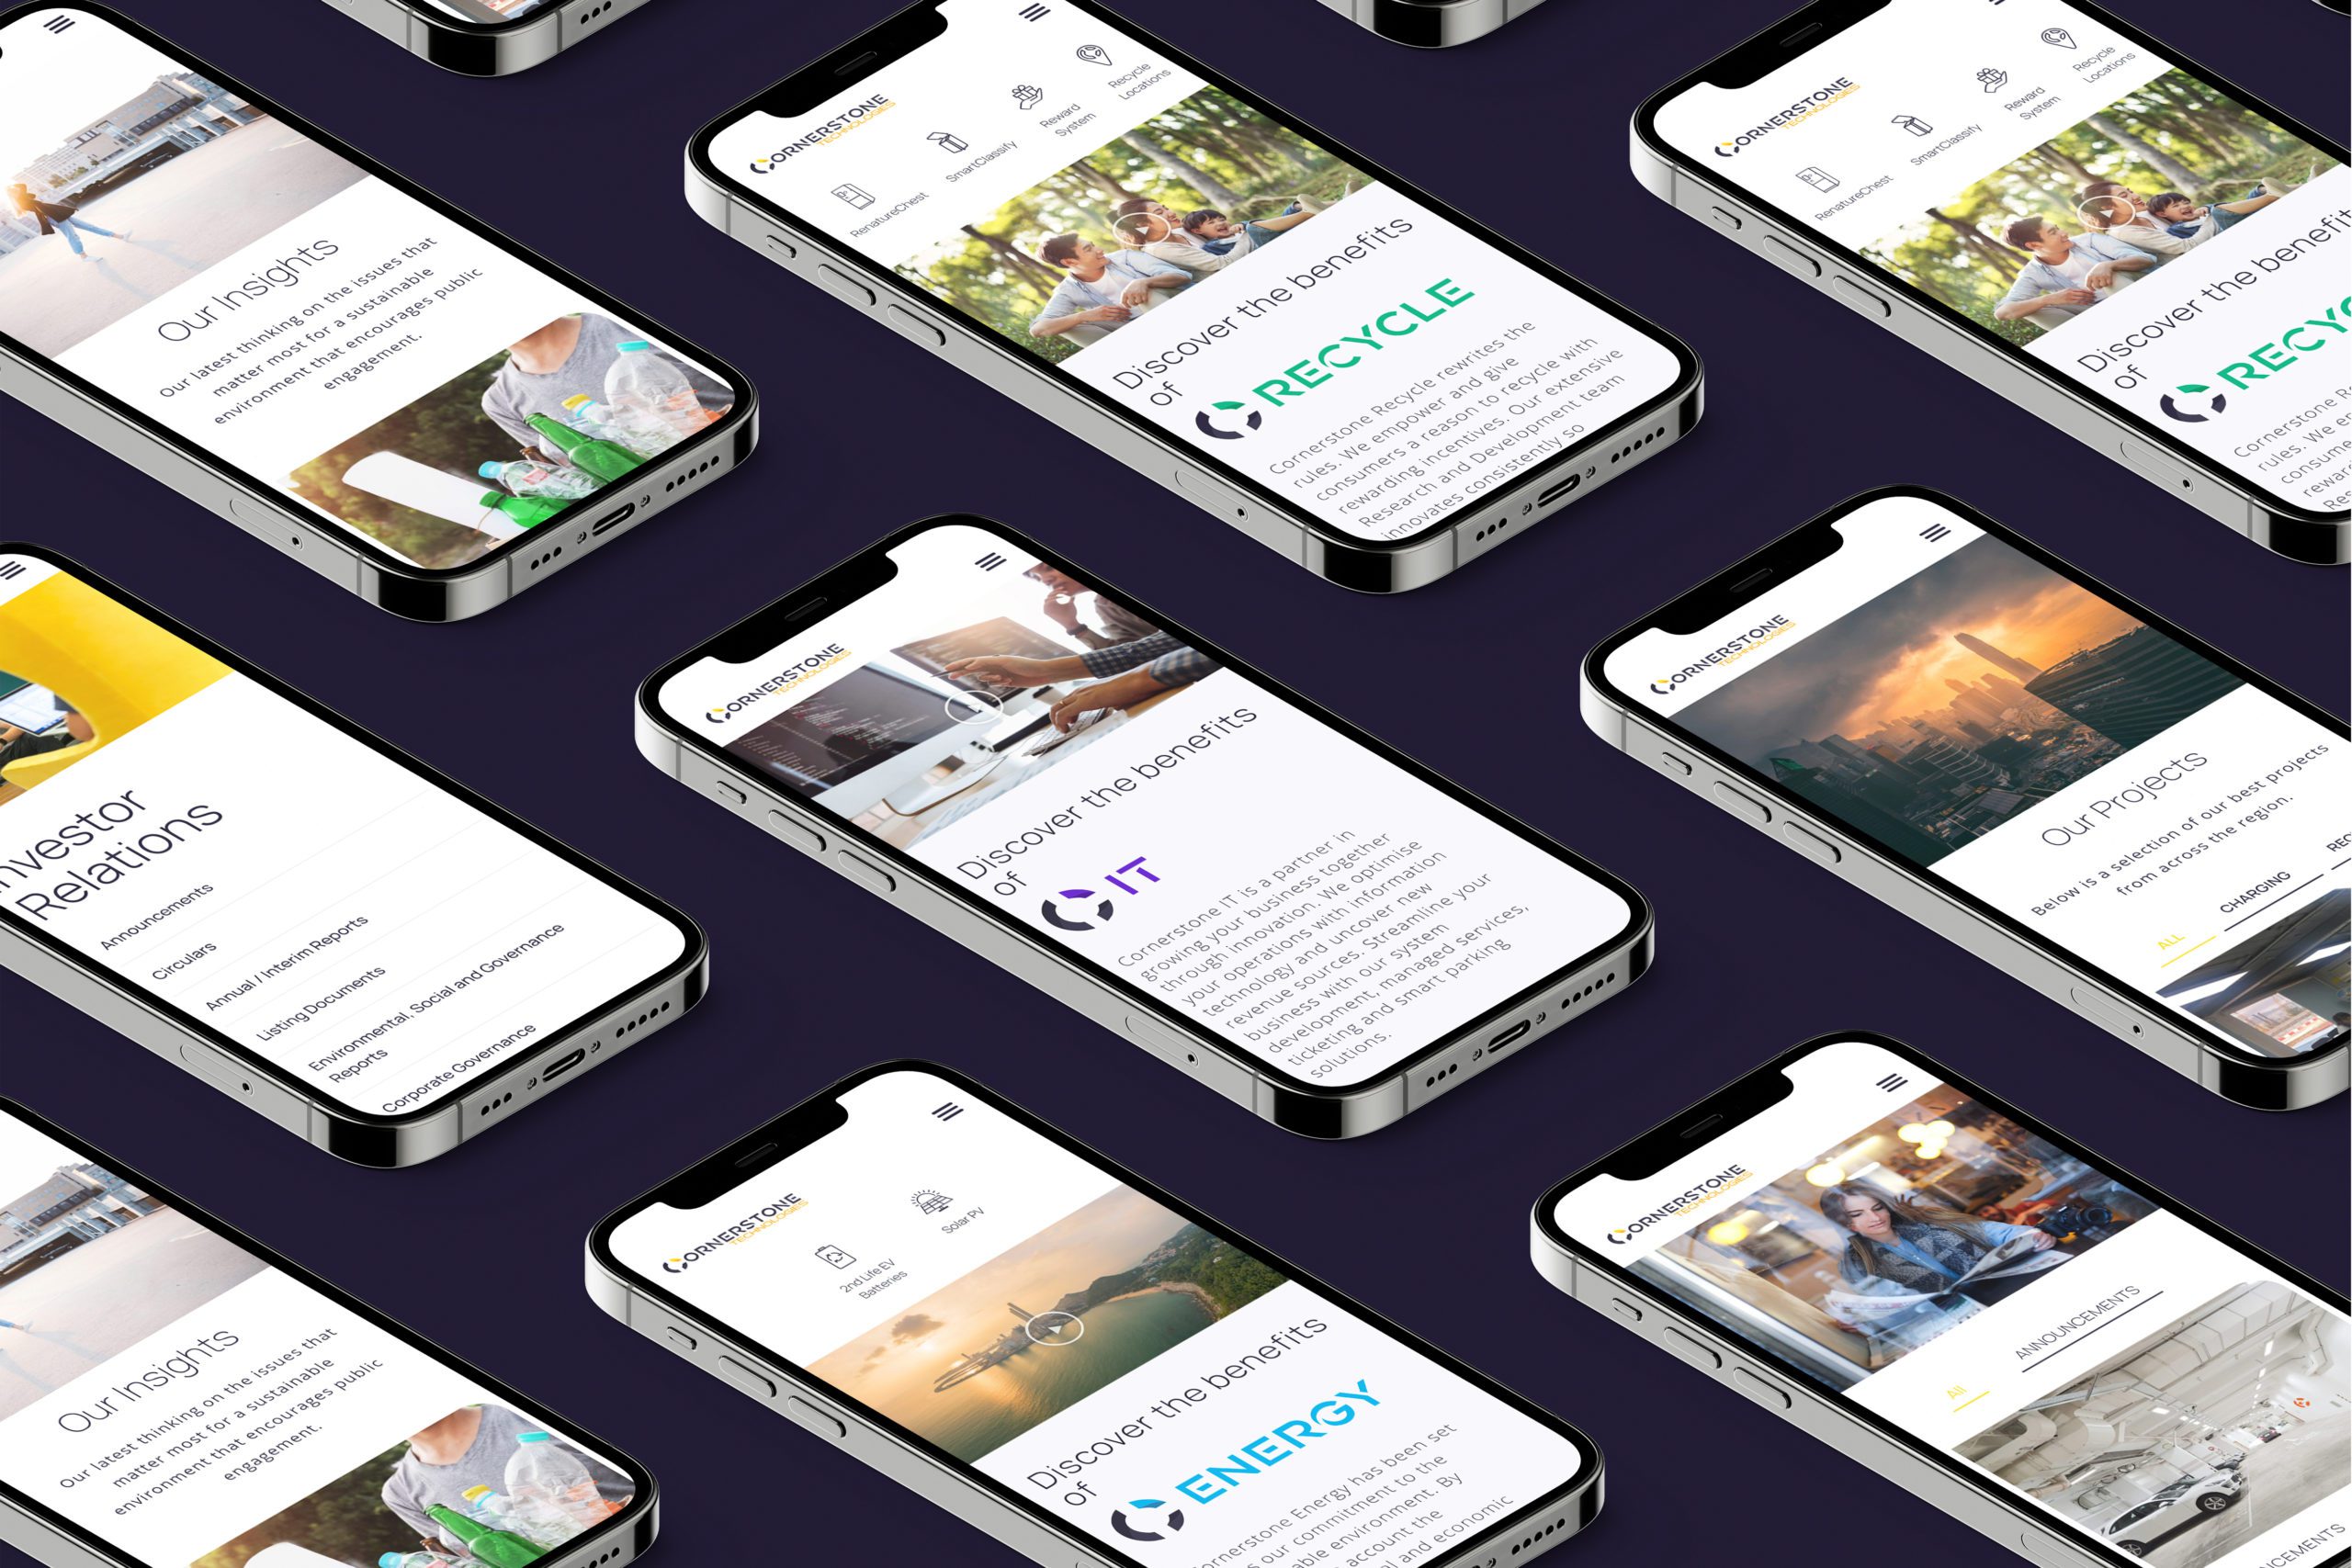 Cornerstone Technologies website on multi iPhone screens with dark purple background